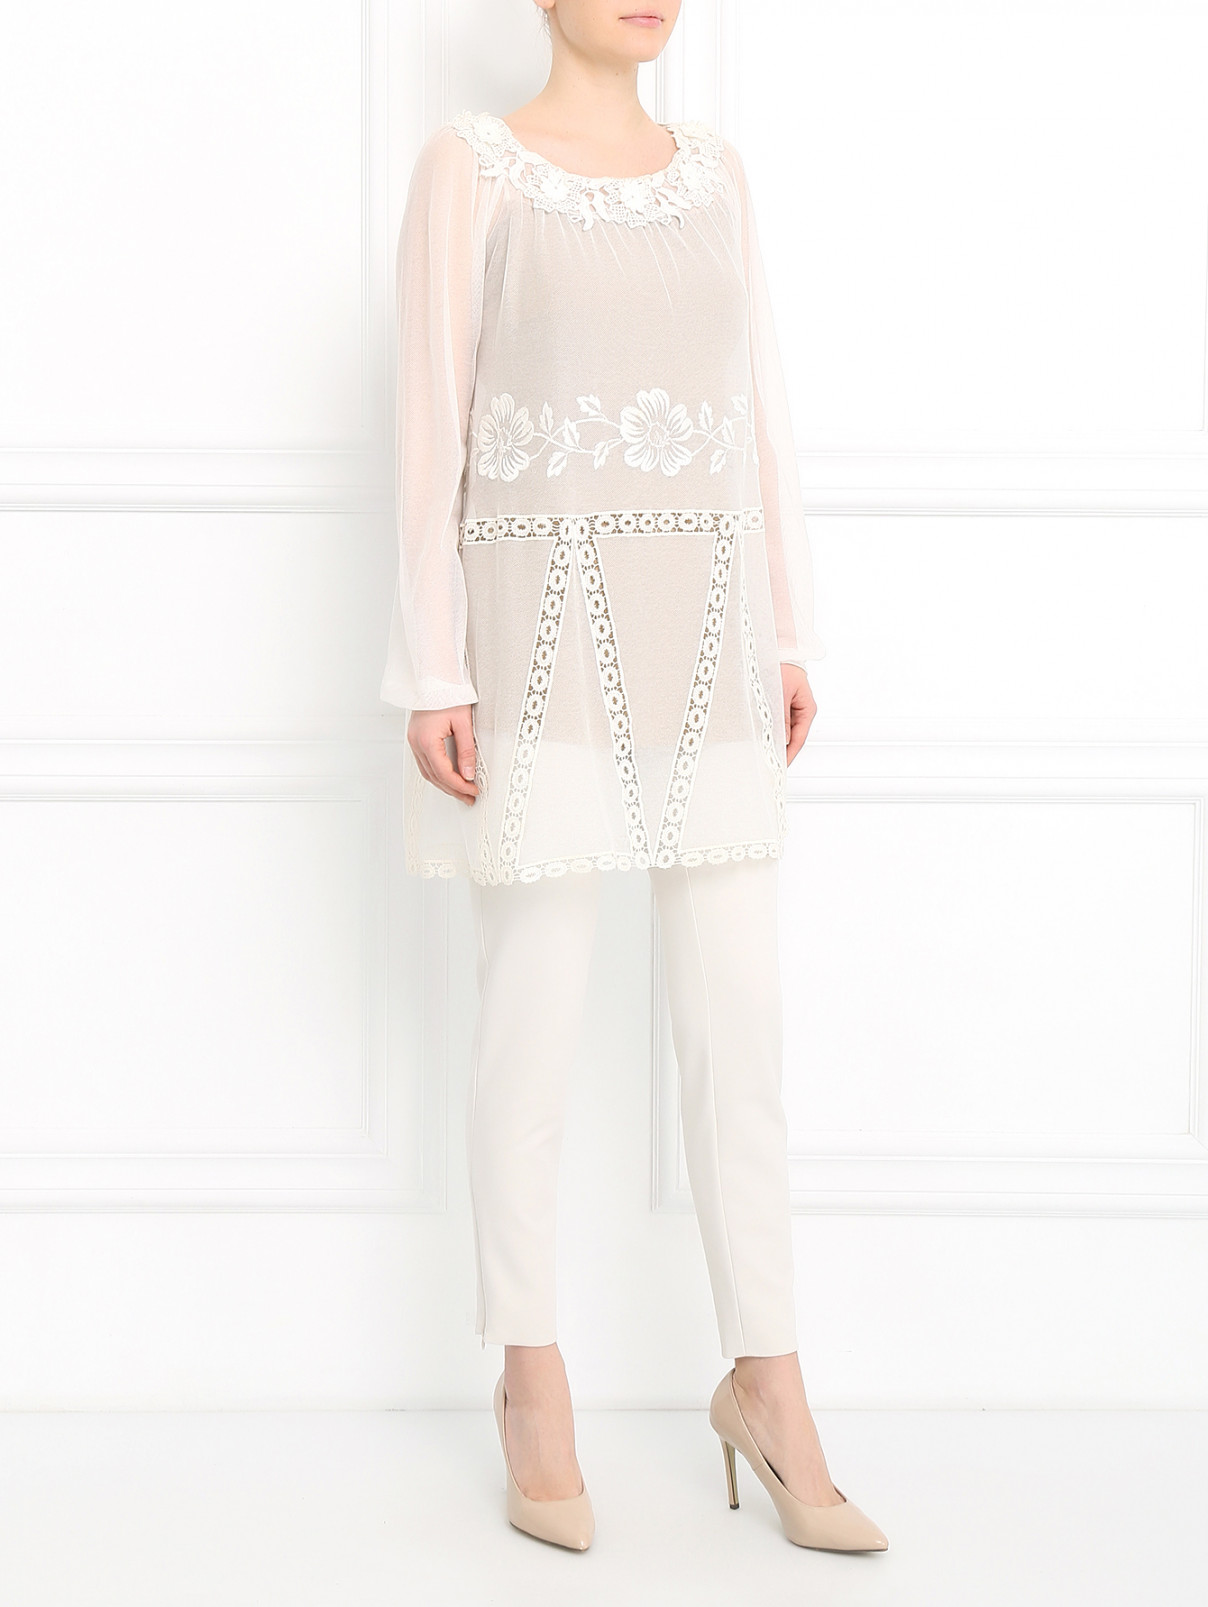 Блуза из хлопкового кружева Alberta Ferretti  –  Модель Общий вид  – Цвет:  Белый